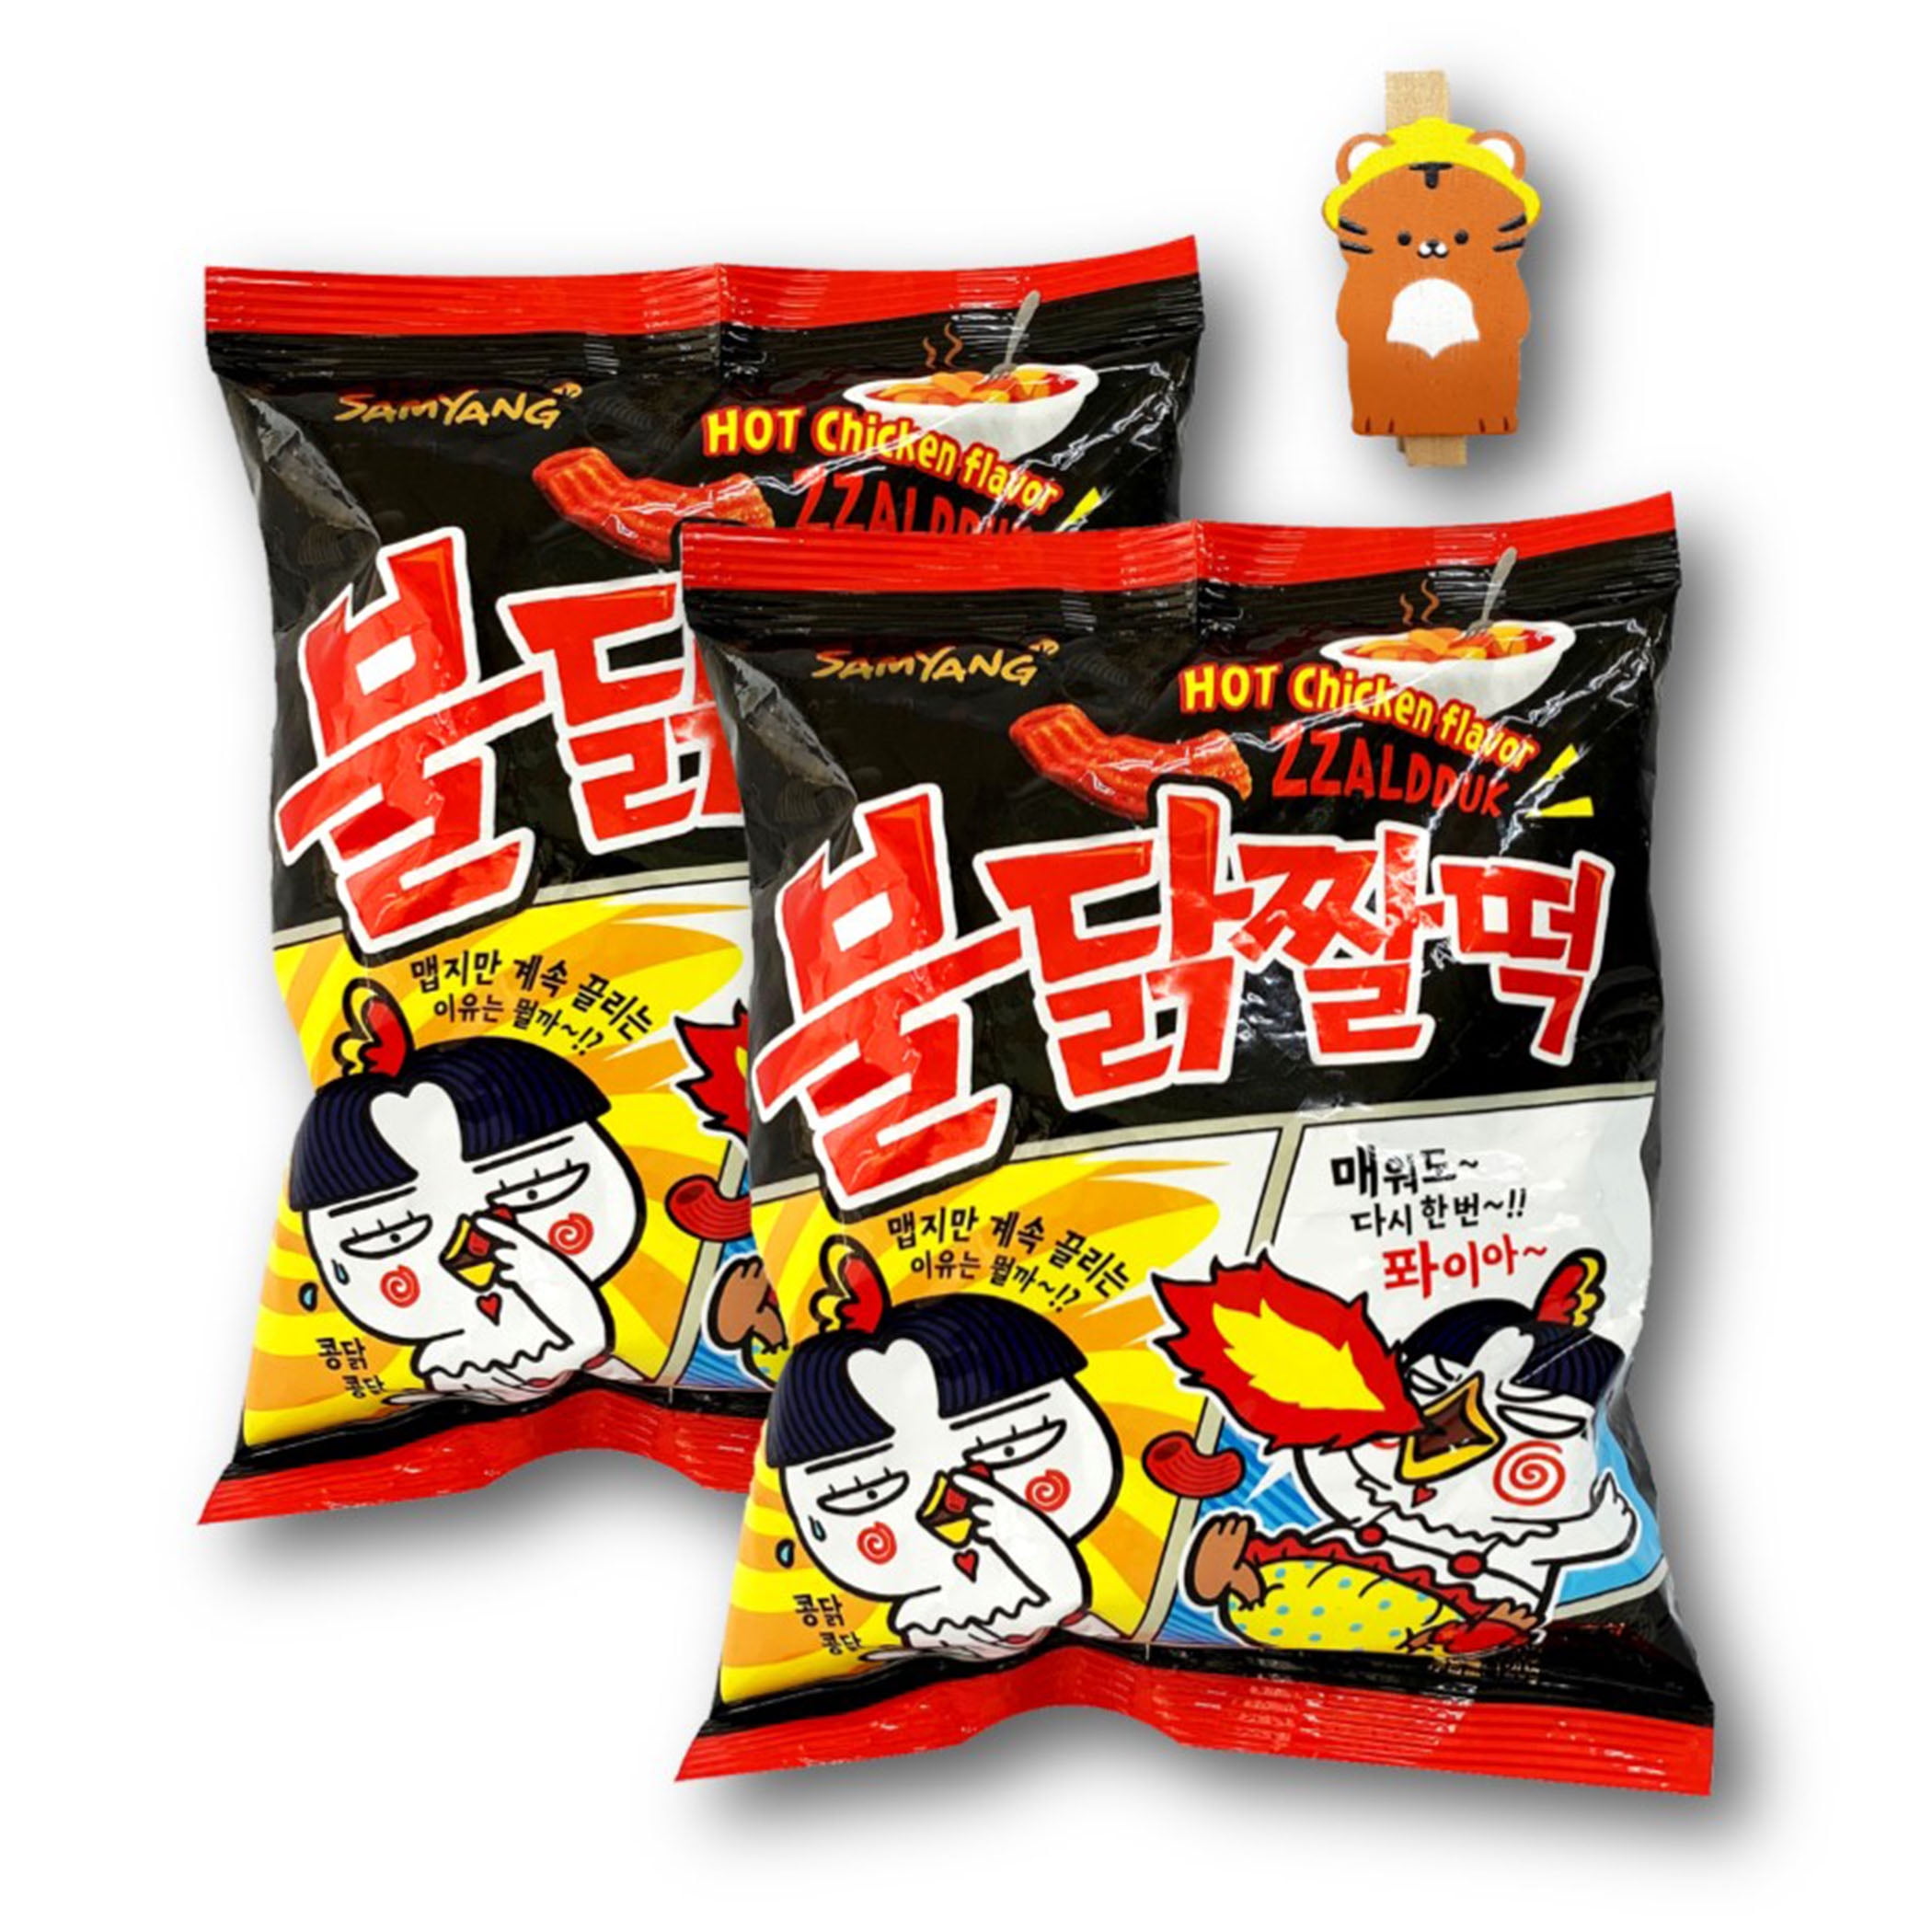 2 Pack Samyang Hot Chicken Flavor Zzaldduk Spicy Korean  